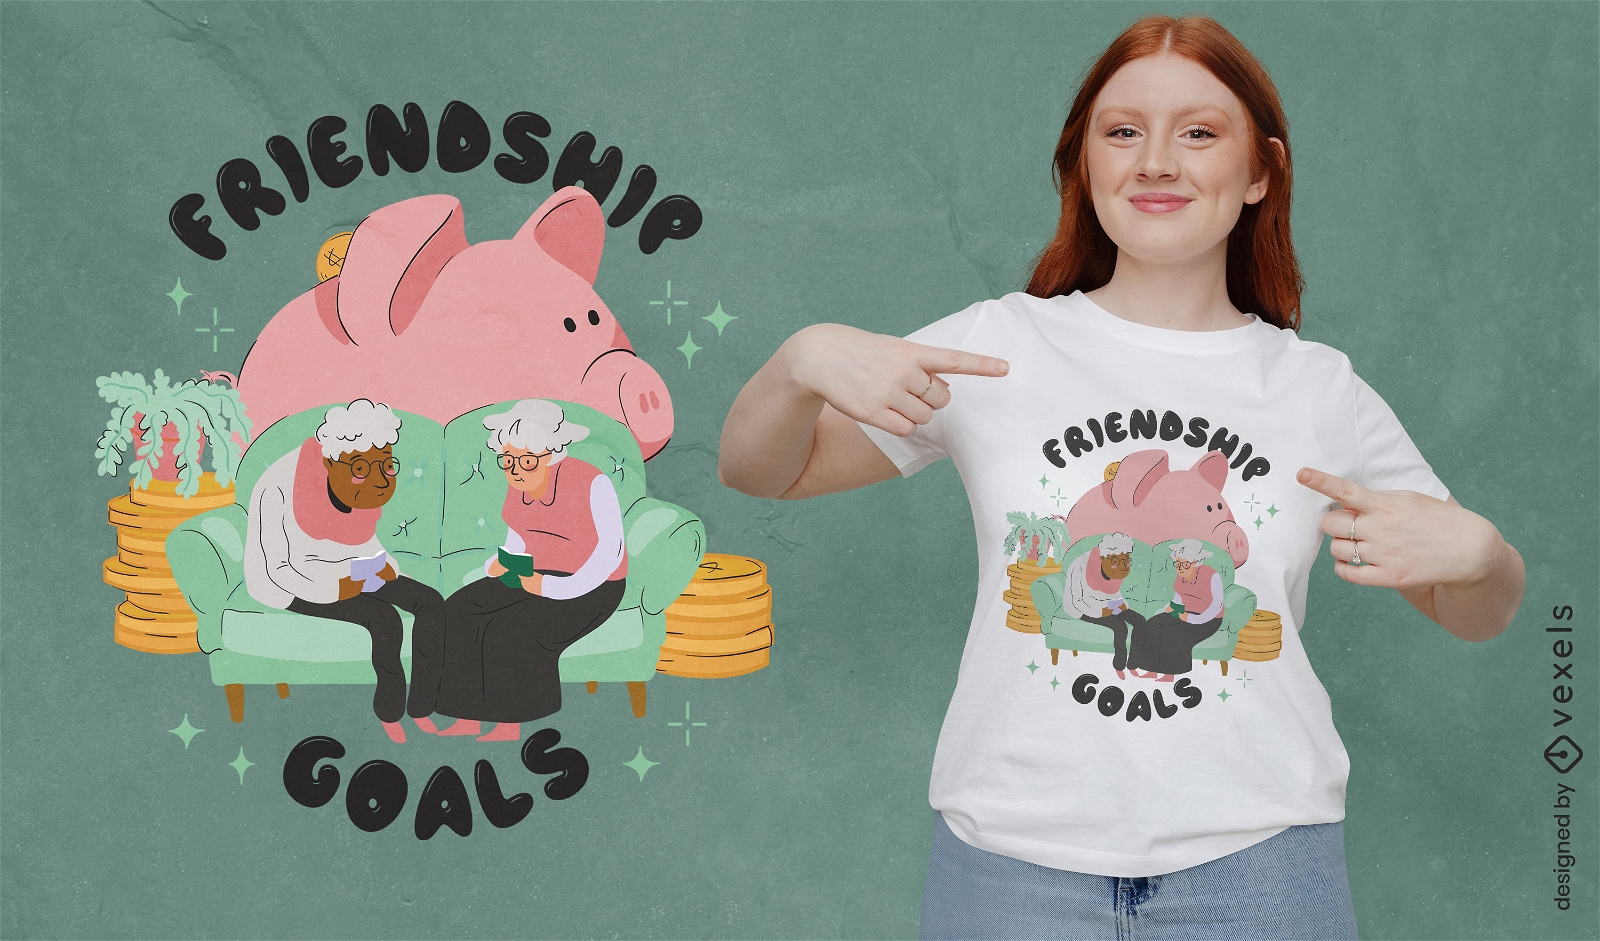 Friendship goals elderly girls t-shirt design